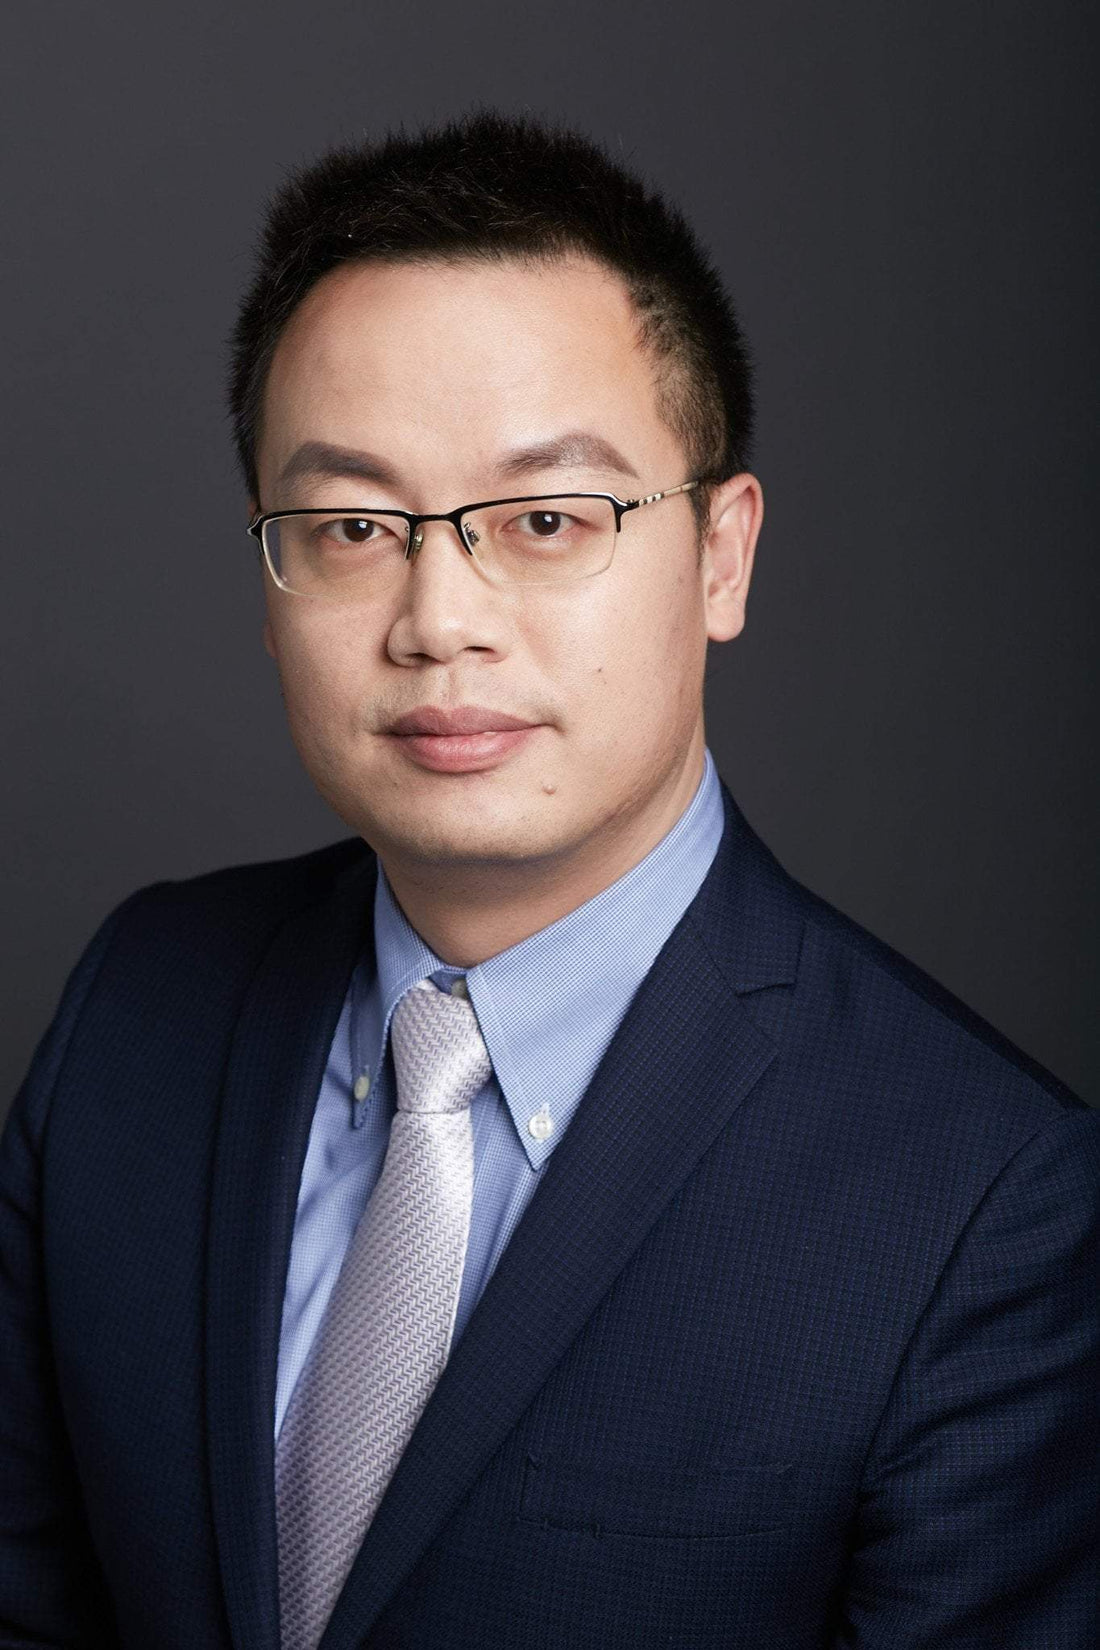 Liu Jinghua Appointed Managing Director of Asia